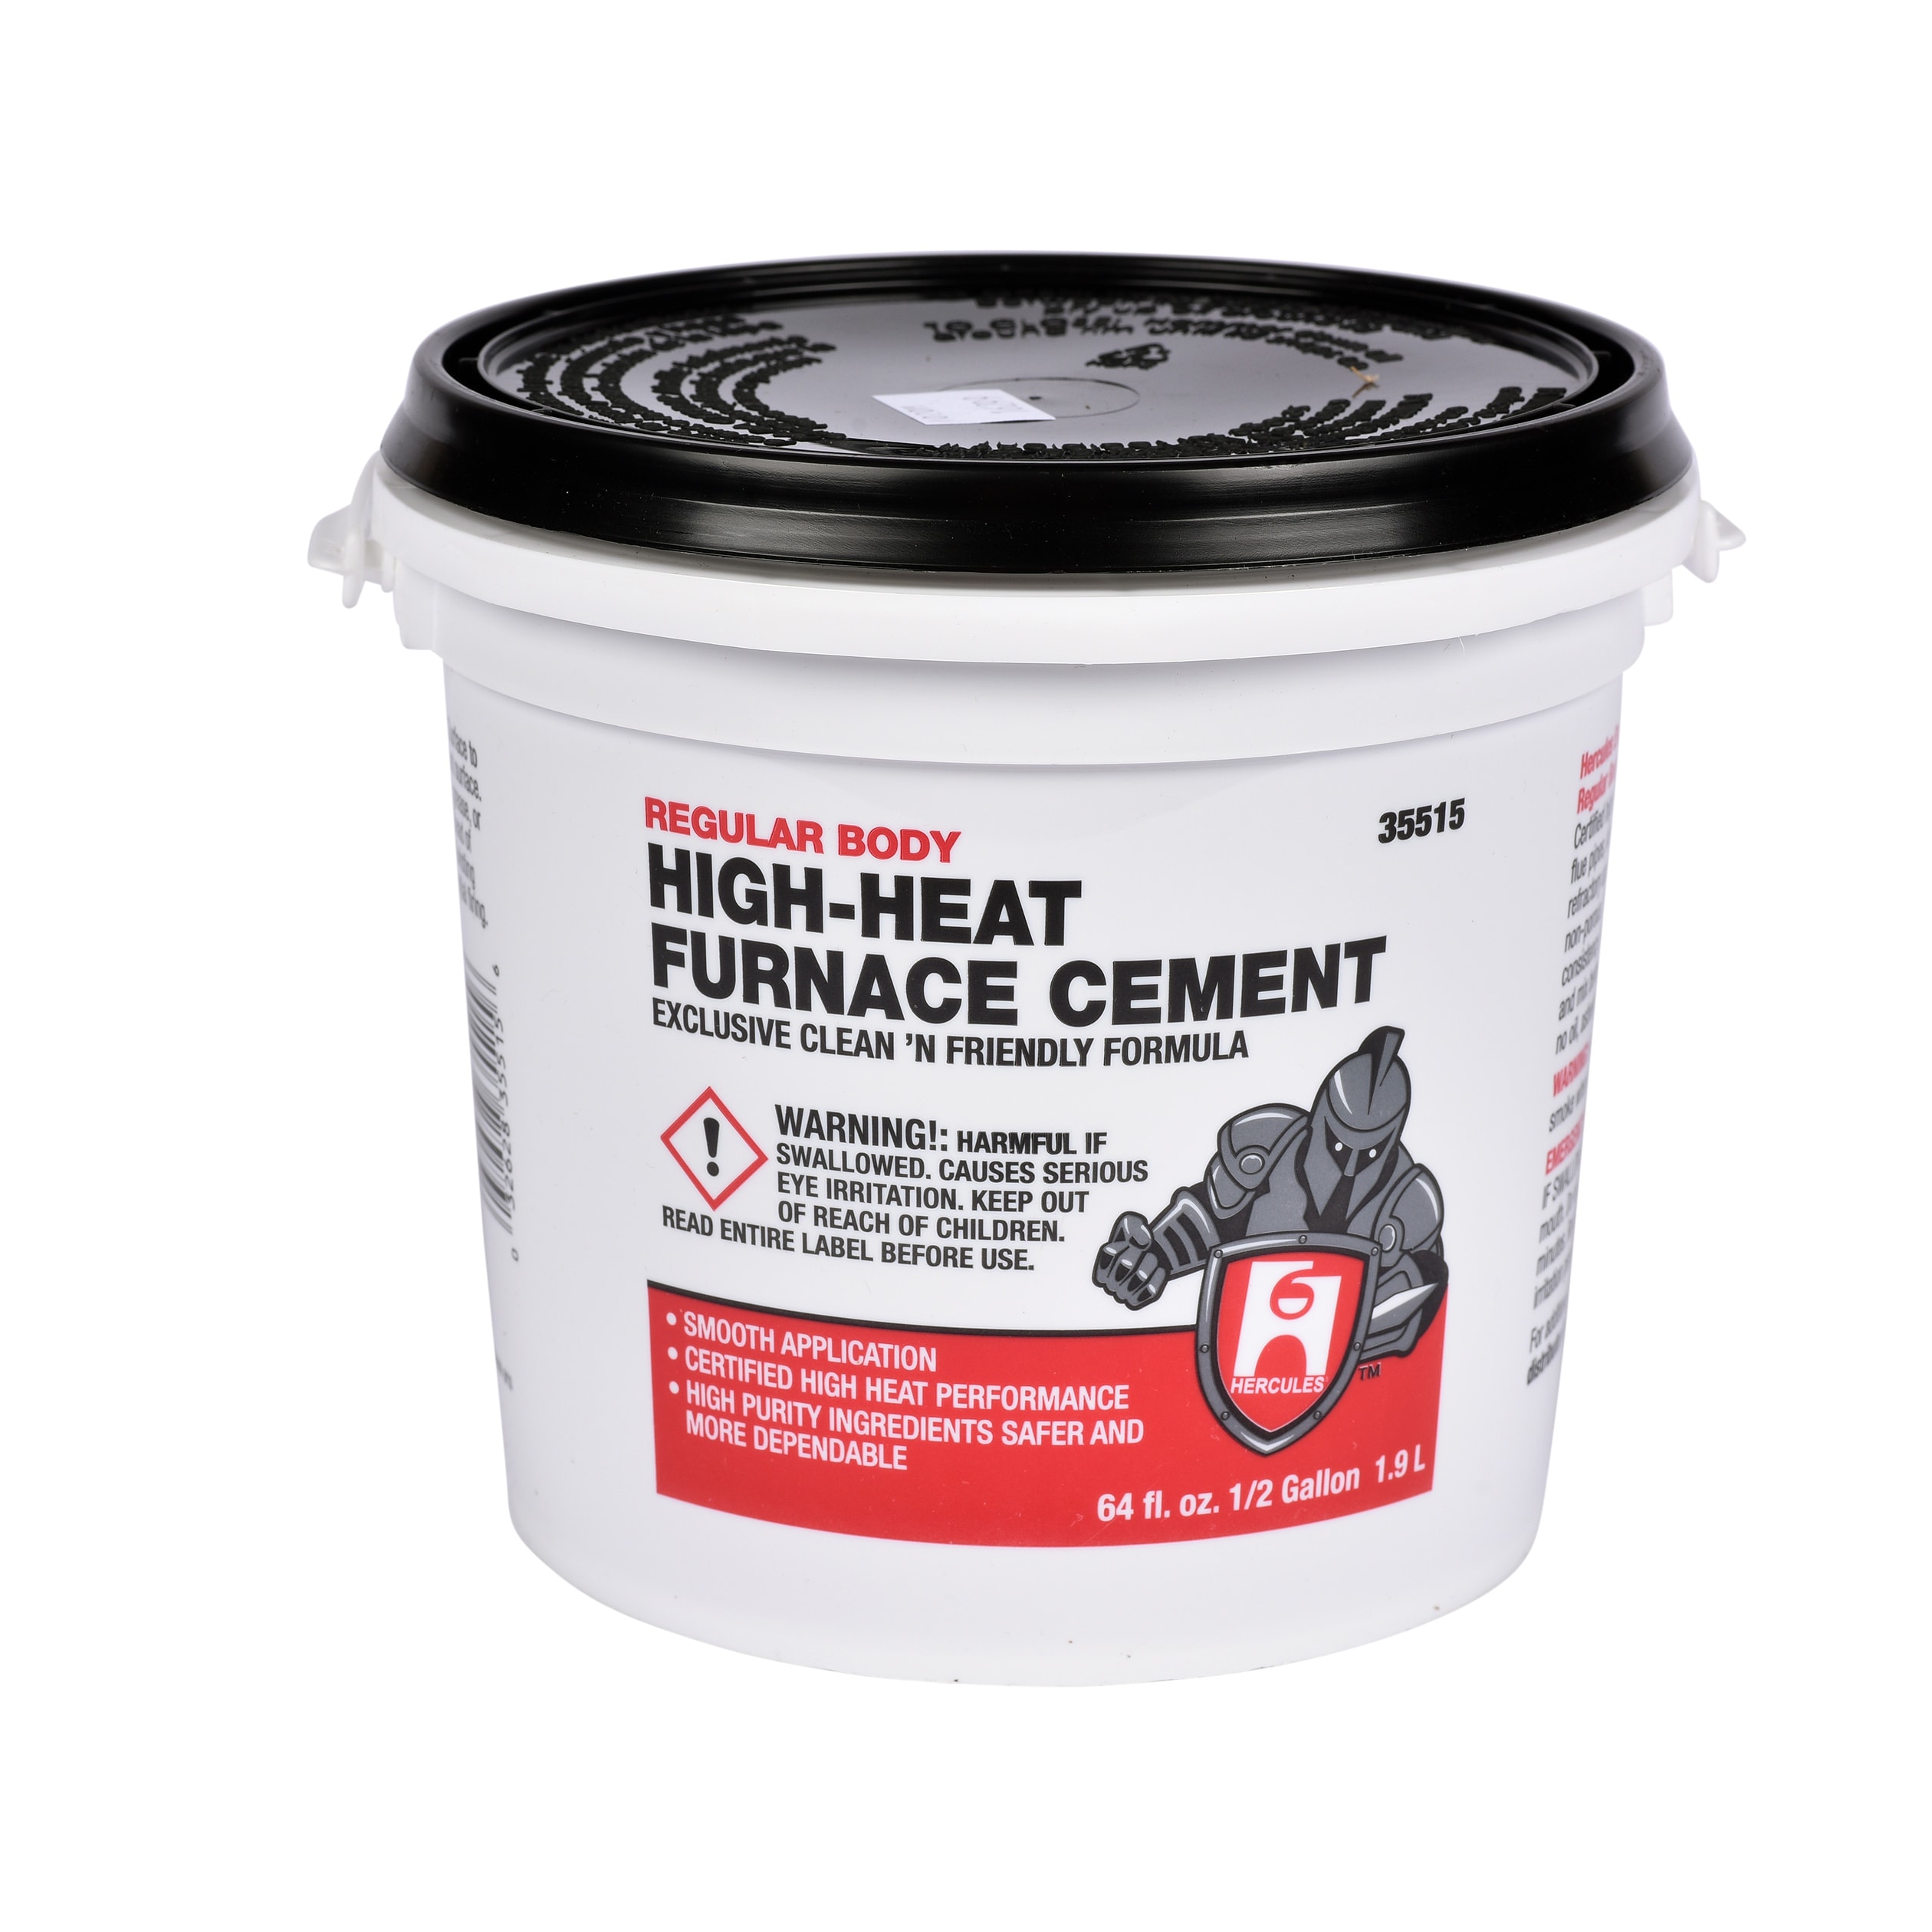 Heat-Stop 50 High Temperature Refractory Mortar, 50-Pound Bag - 9236050